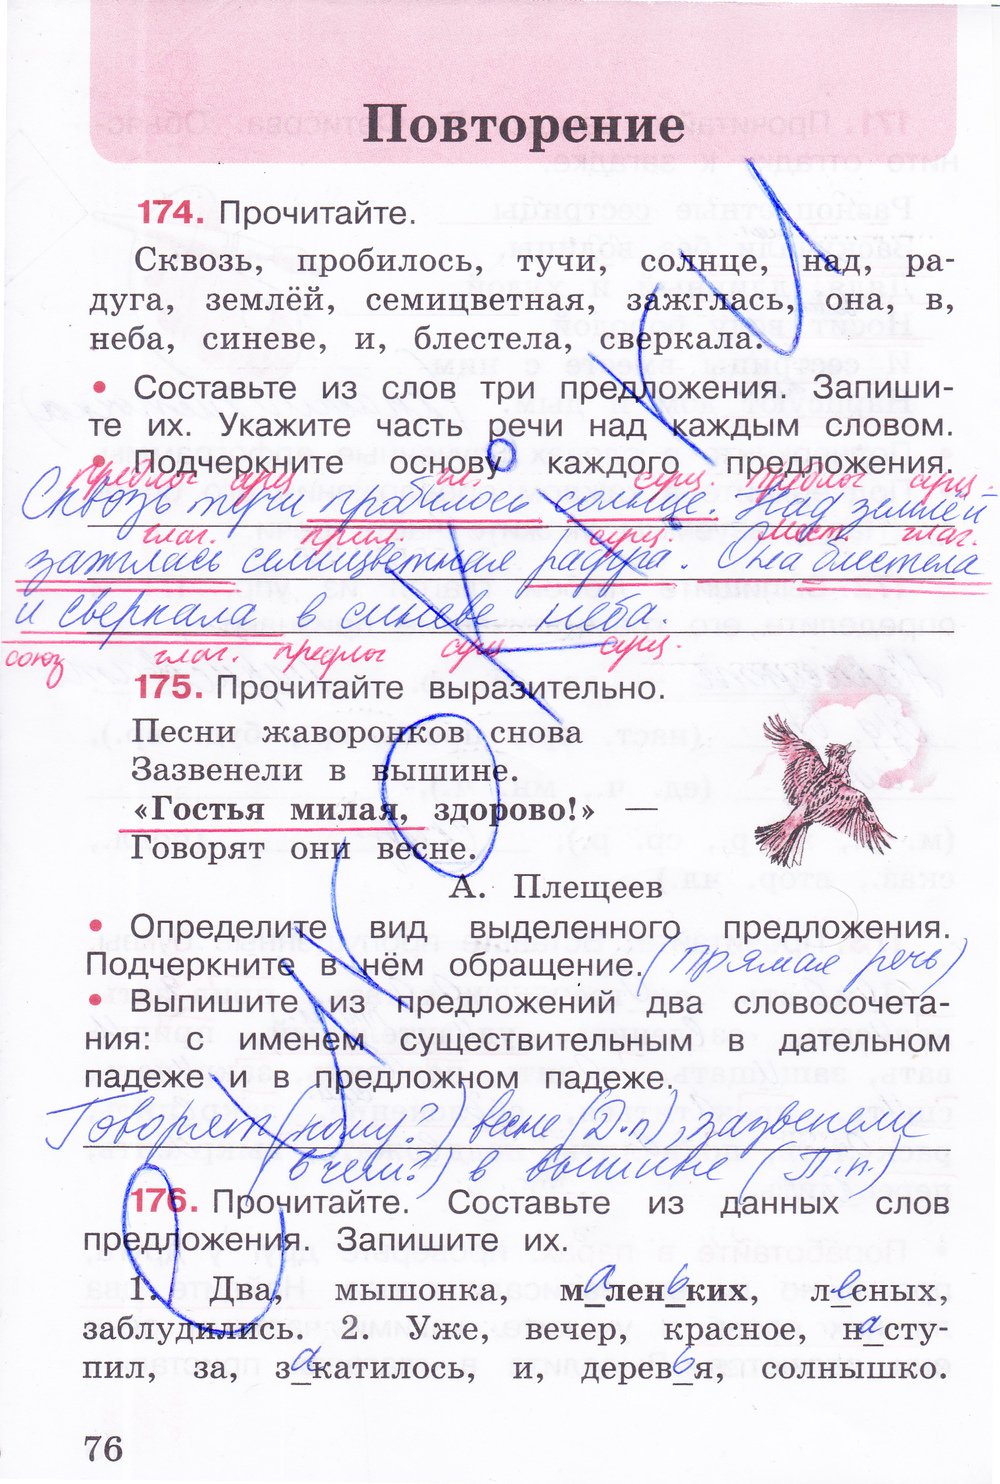 Телеграмм гдз по русскому языку фото 100